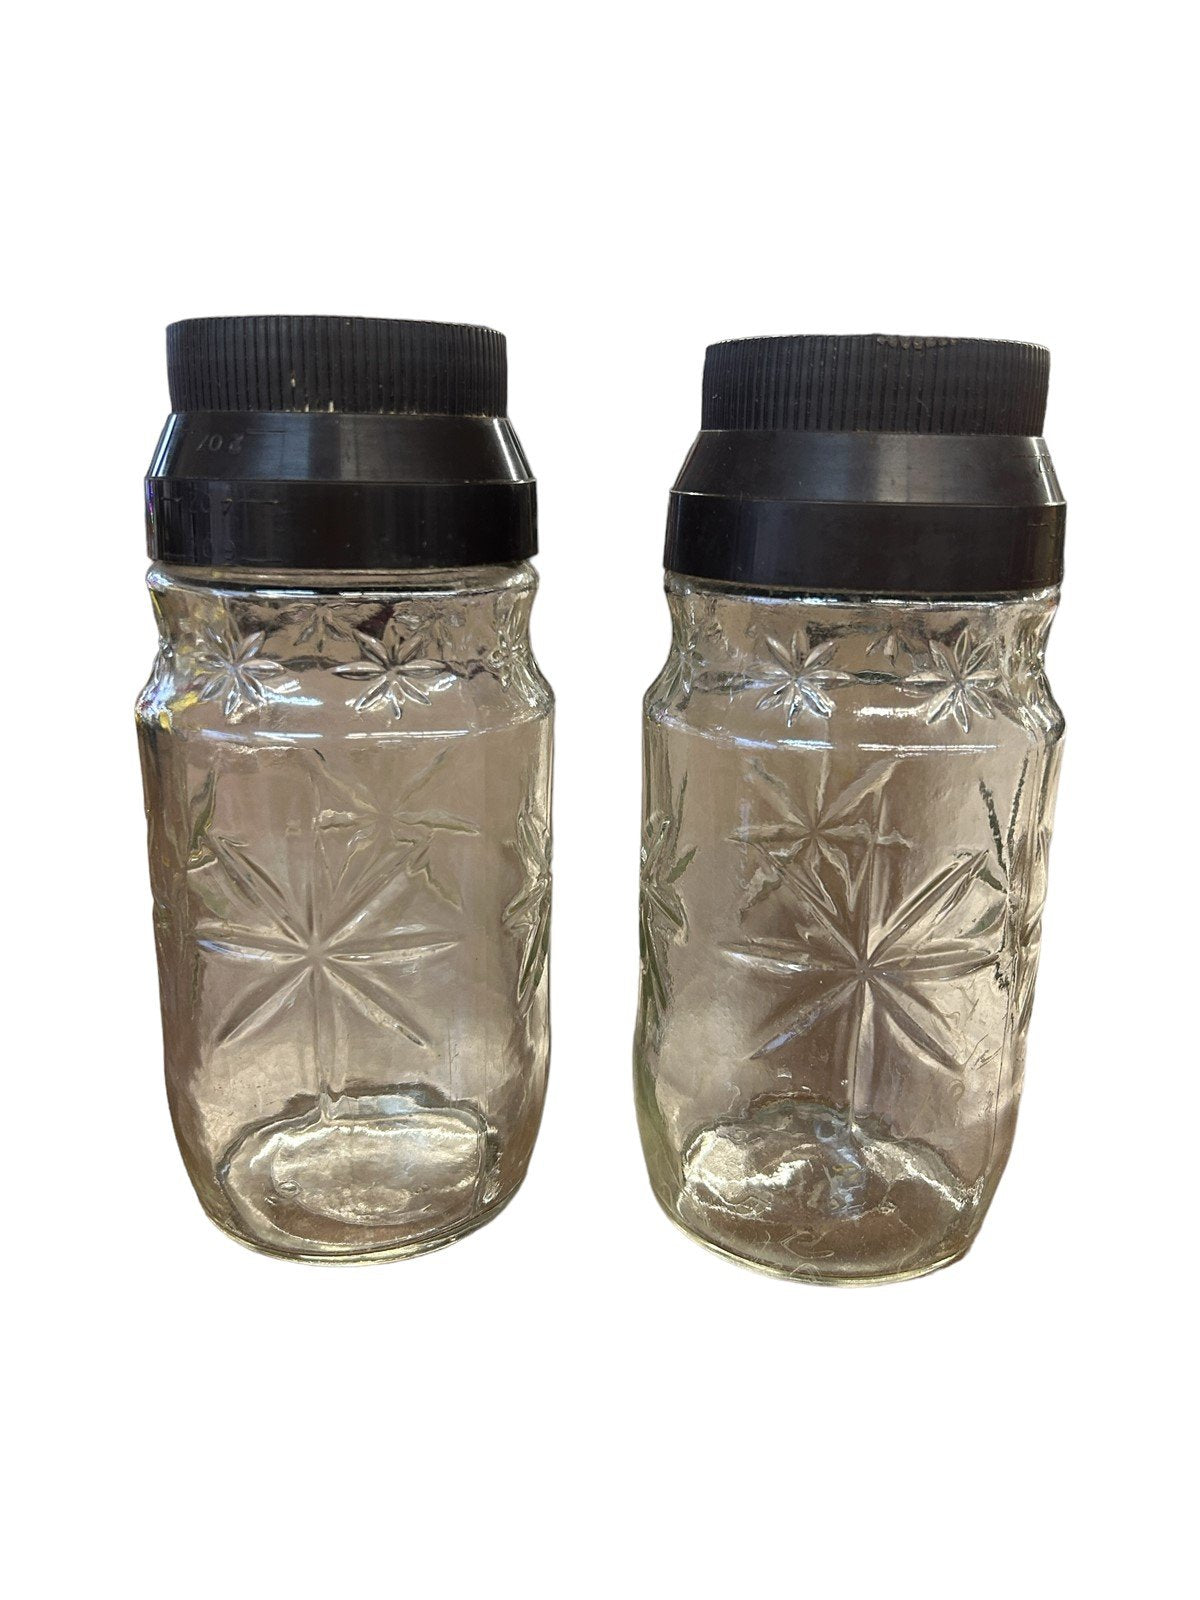 Anchor Hocking Sanka Instant Coffee Glass Jars Pair Set of 2 1970's Starburst